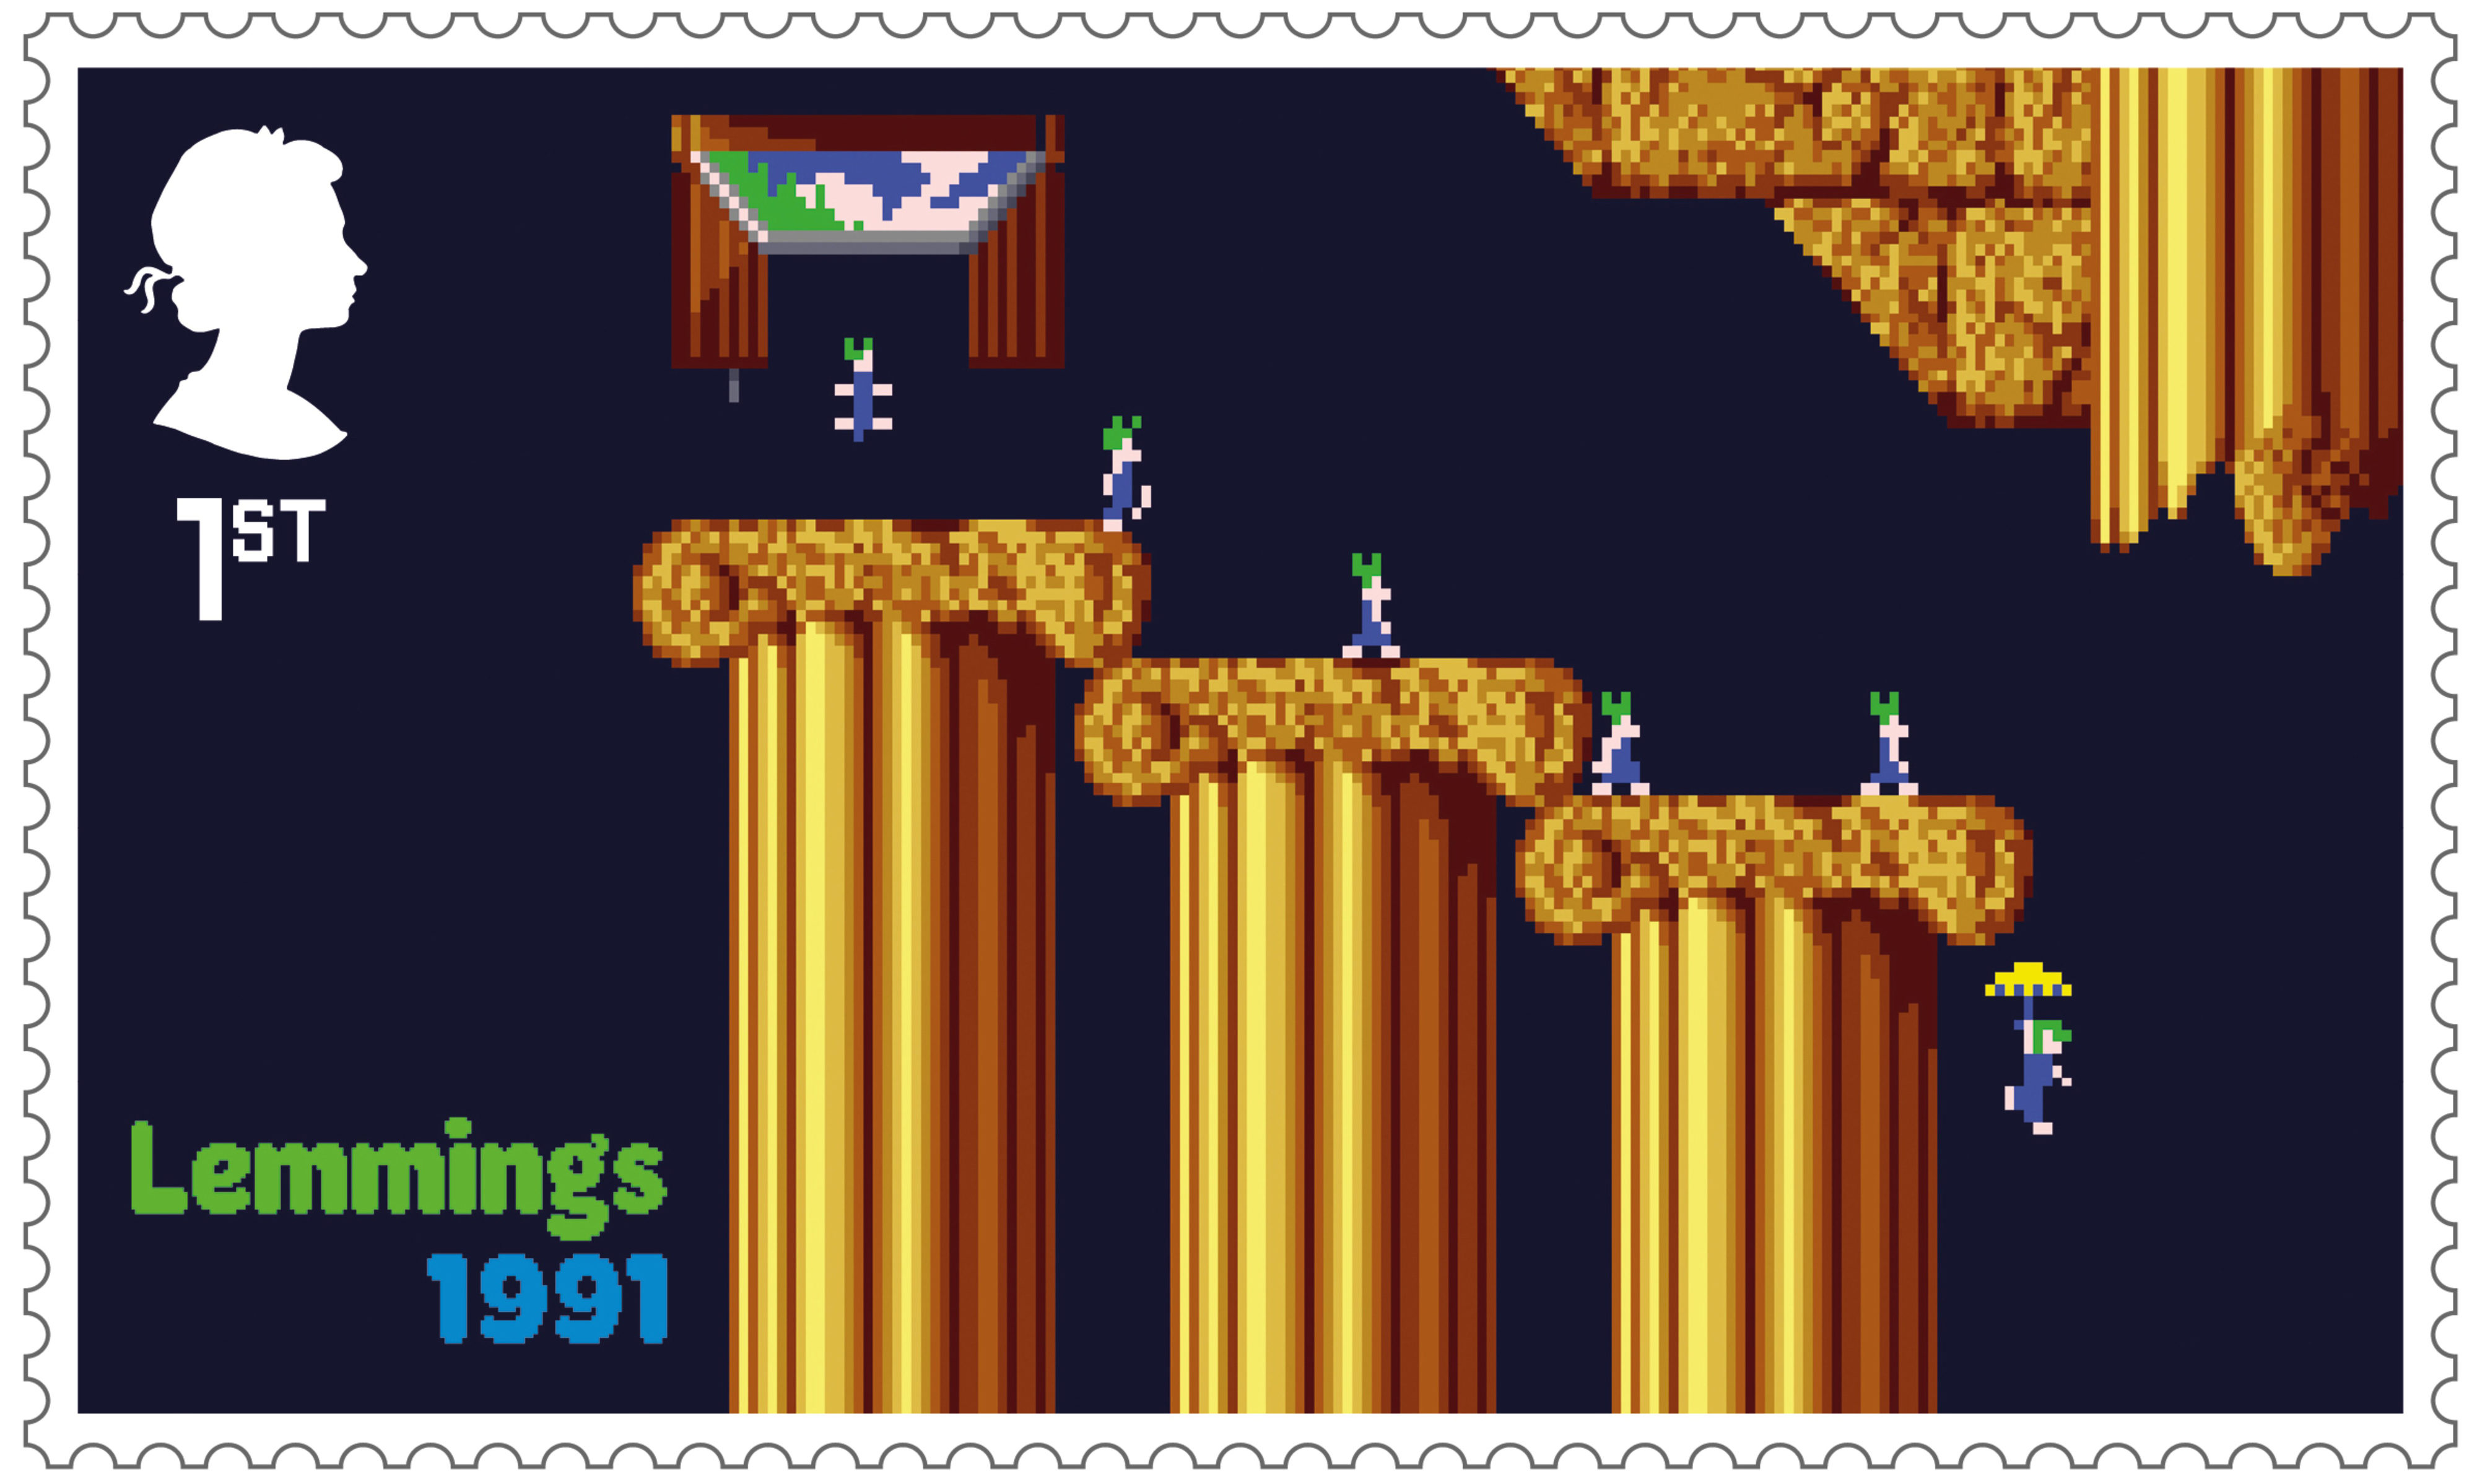 Lemmings postage stamp